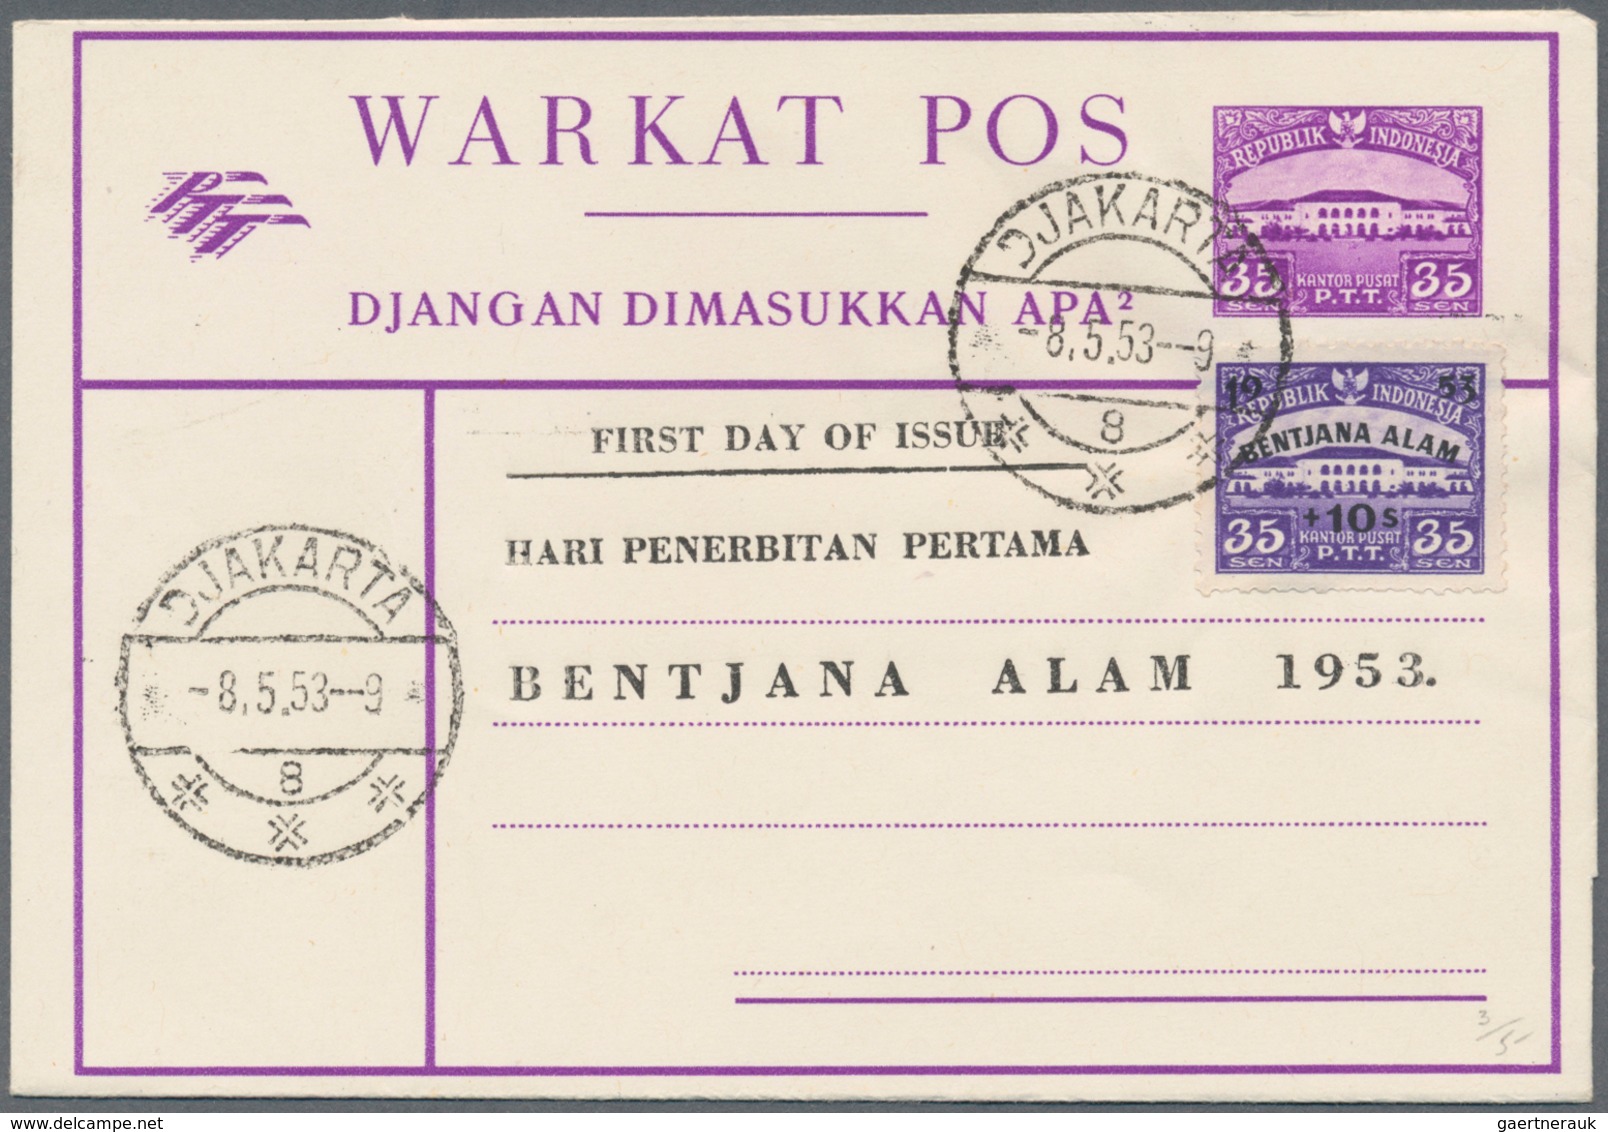 Indonesien: 1949/97 (ca.), Stationery Envelopes (warkat Pos / Postblad) Specialized Stock: 10 S. (mi - Indonesia